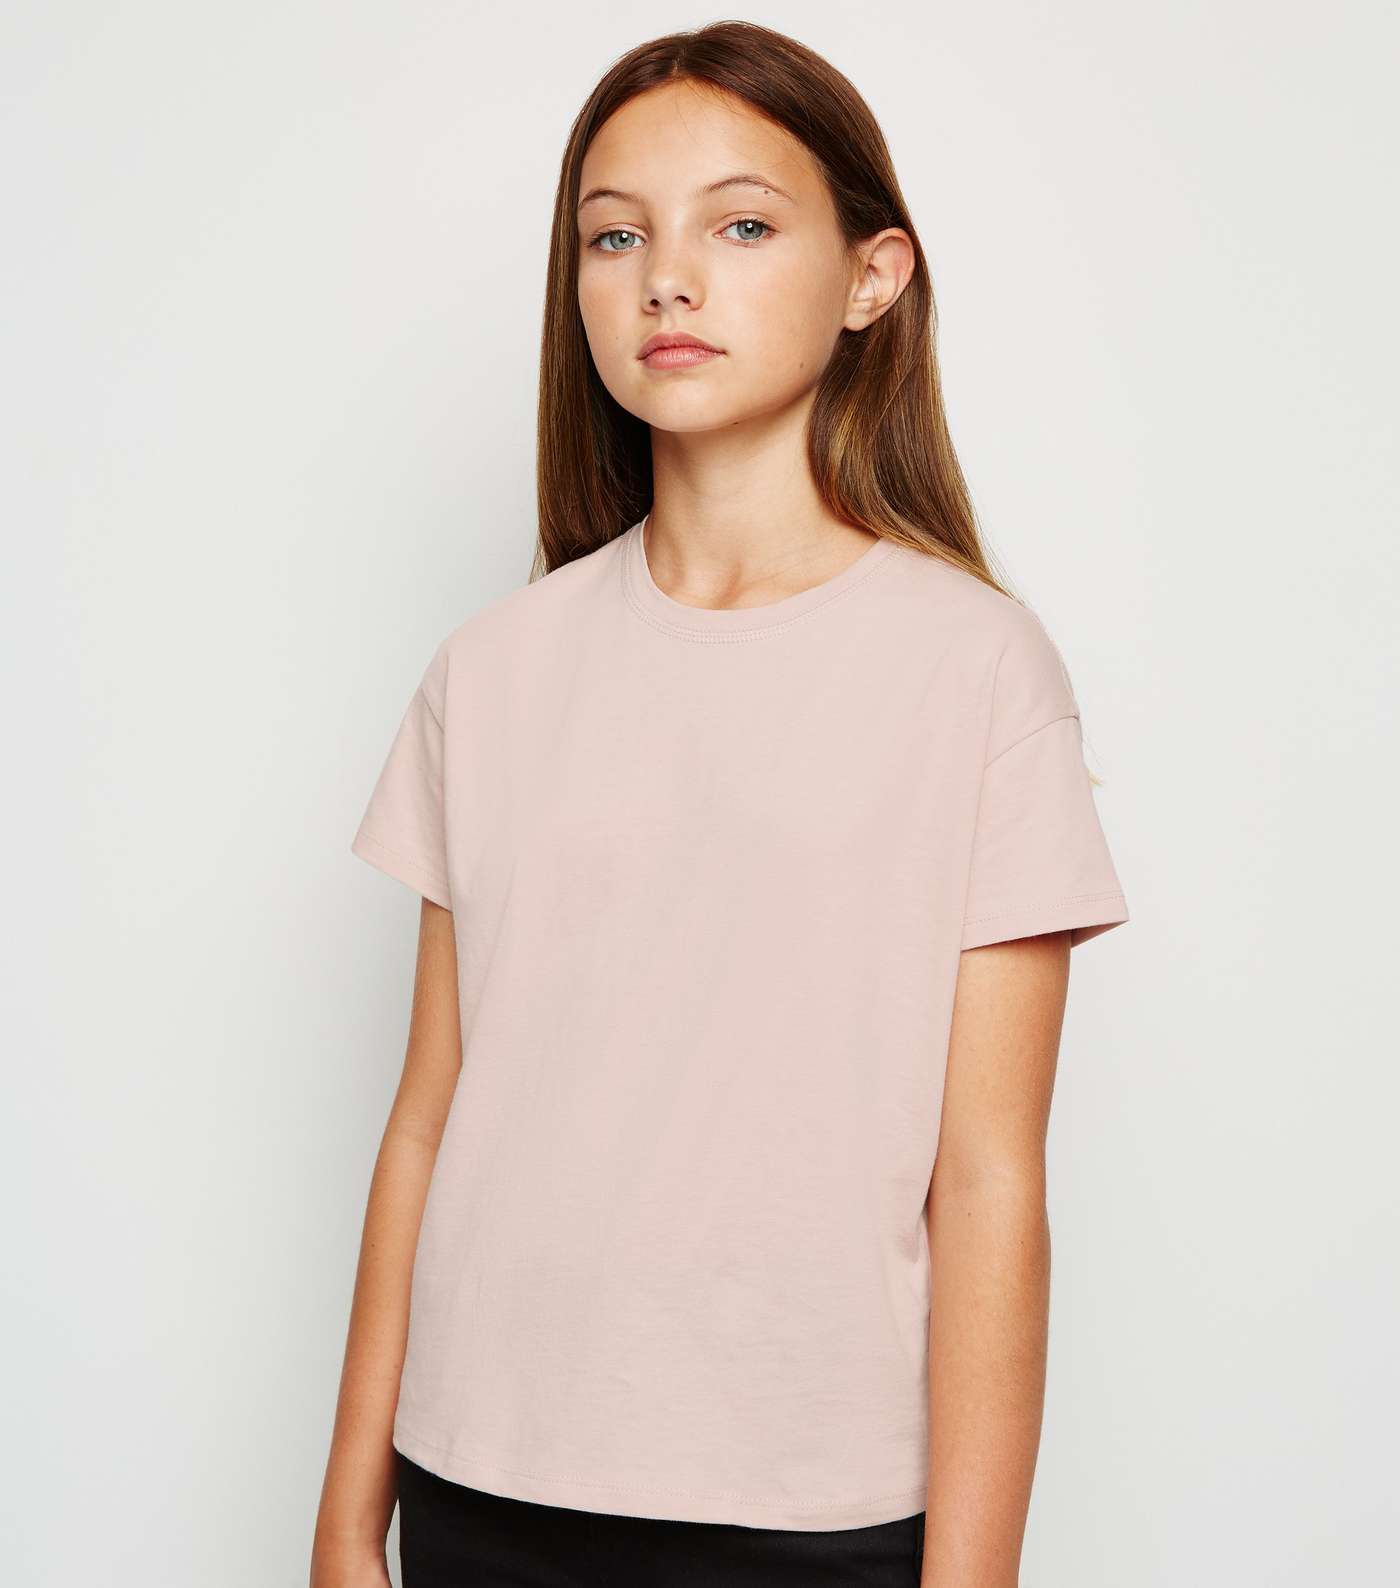 Girls Pale Pink Cotton T-Shirt